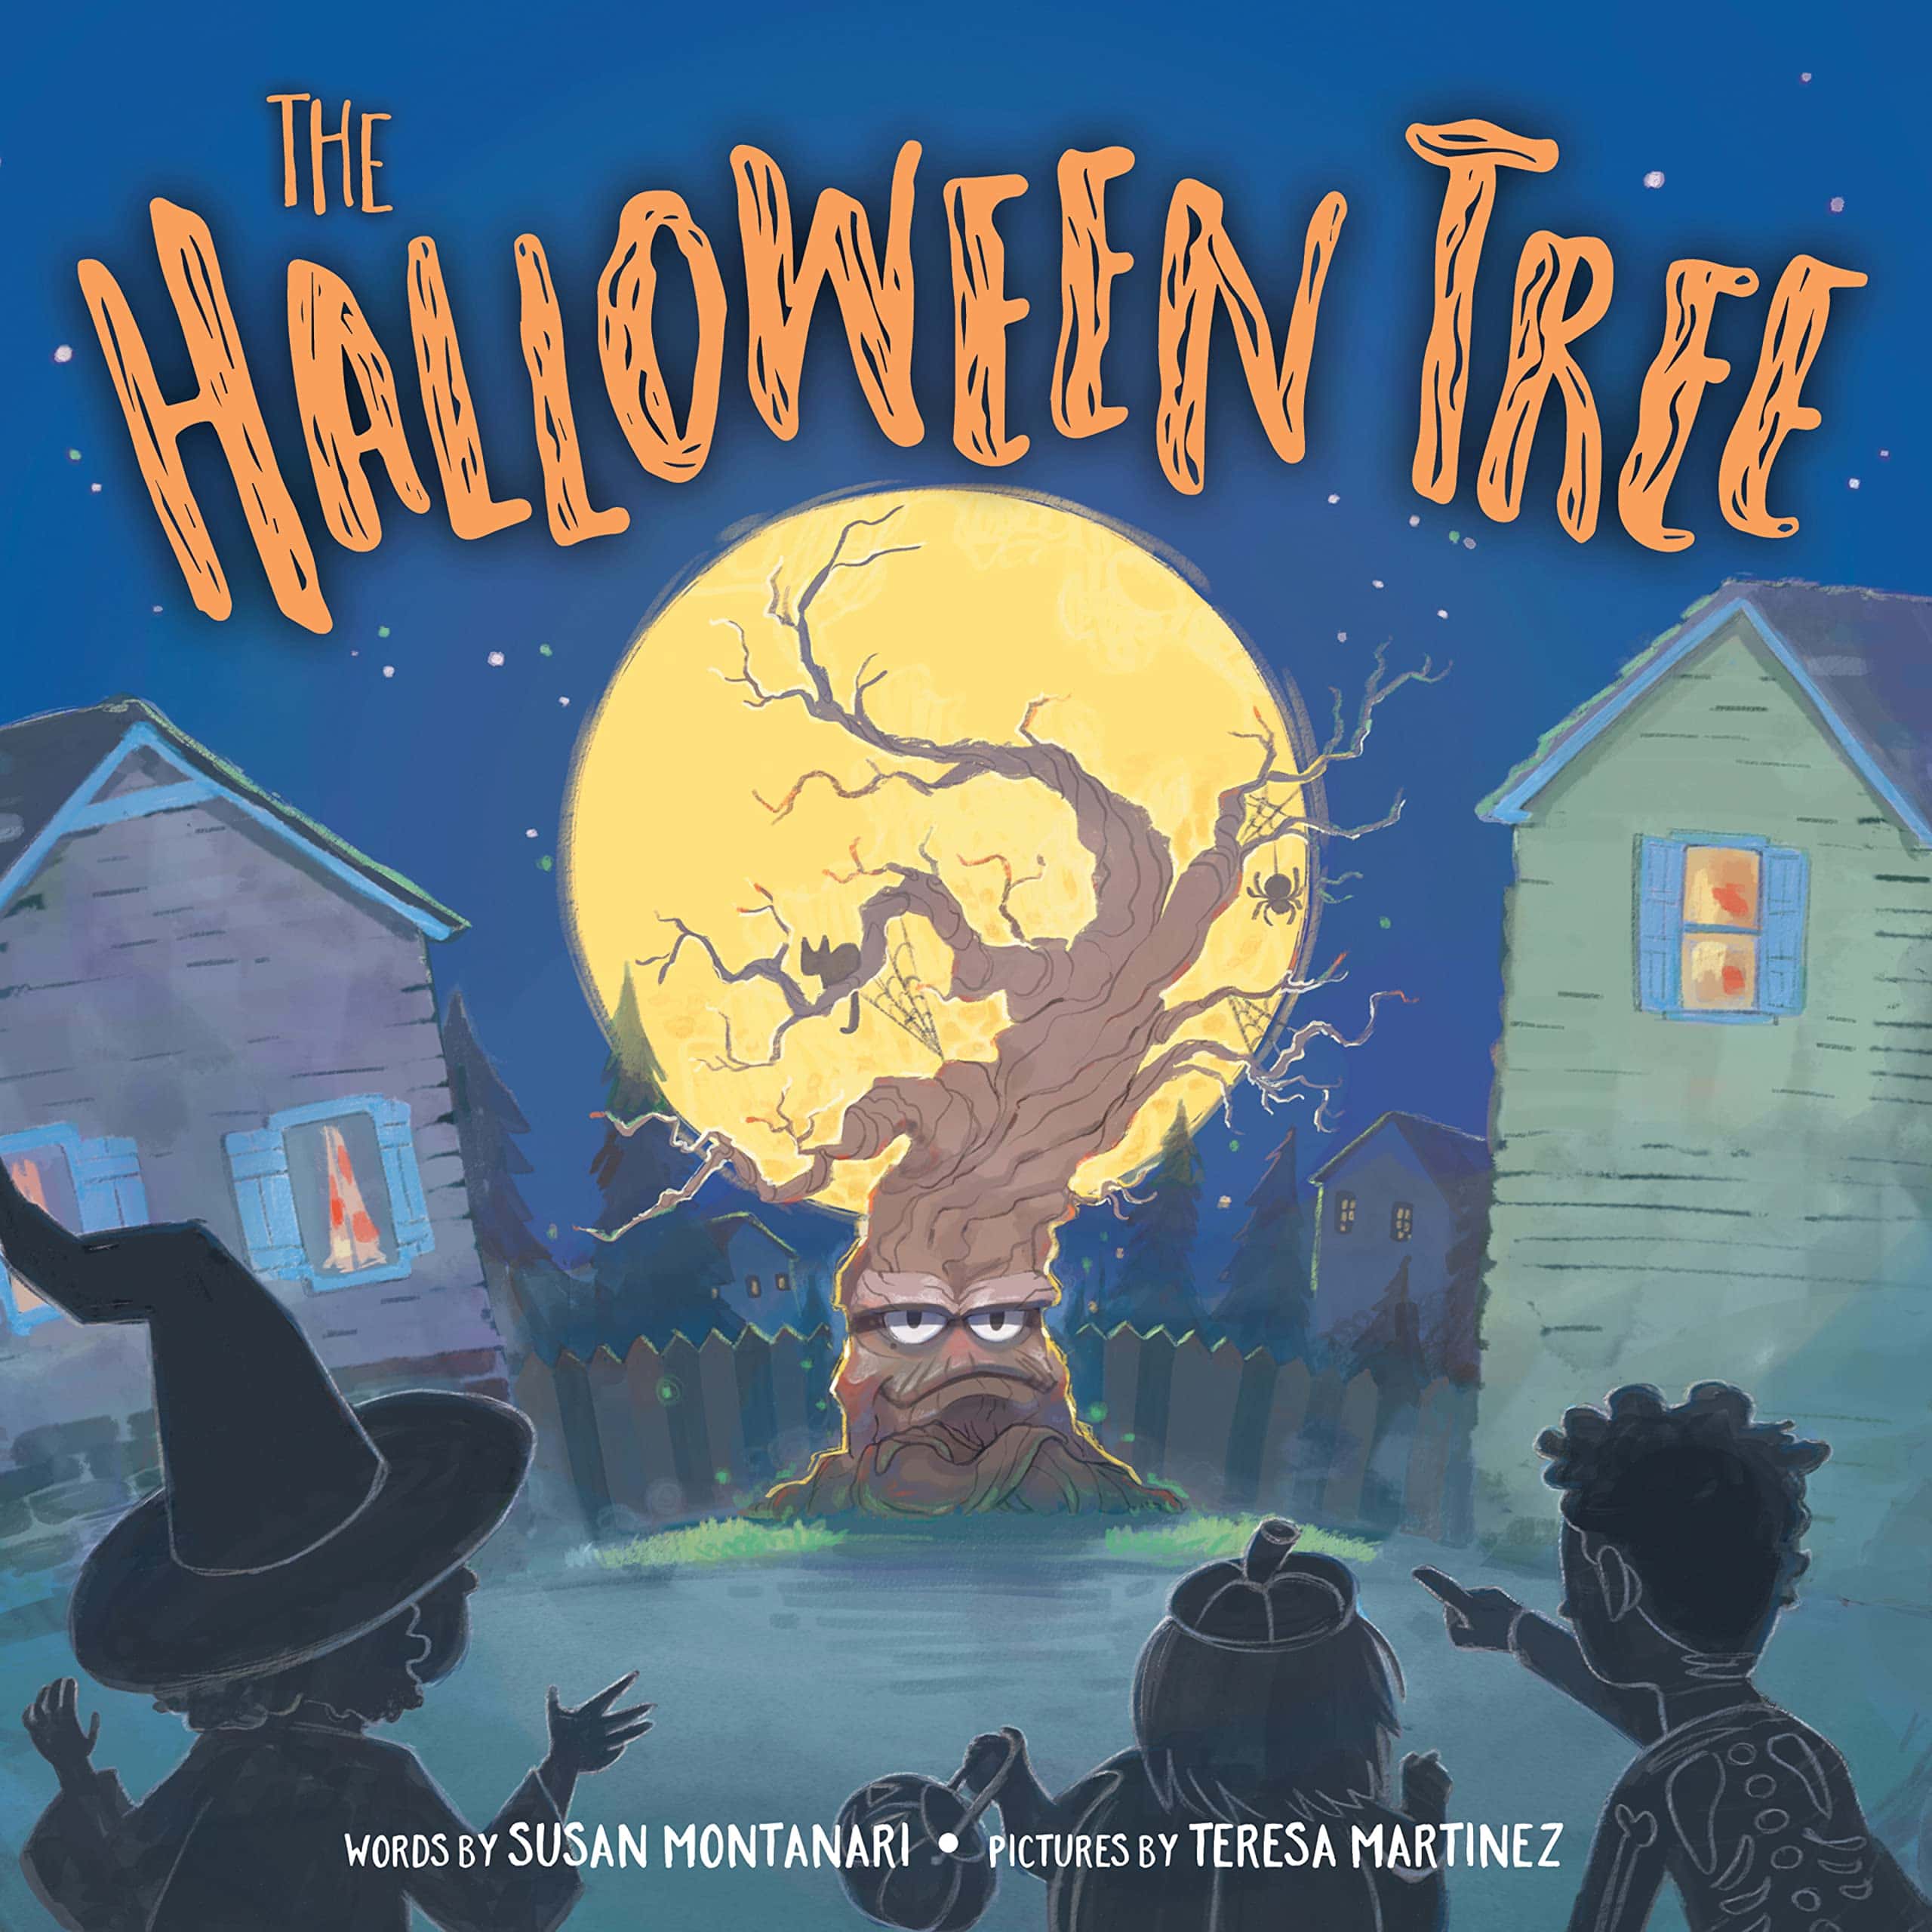 "The Halloween Tree" by Susan Montanari